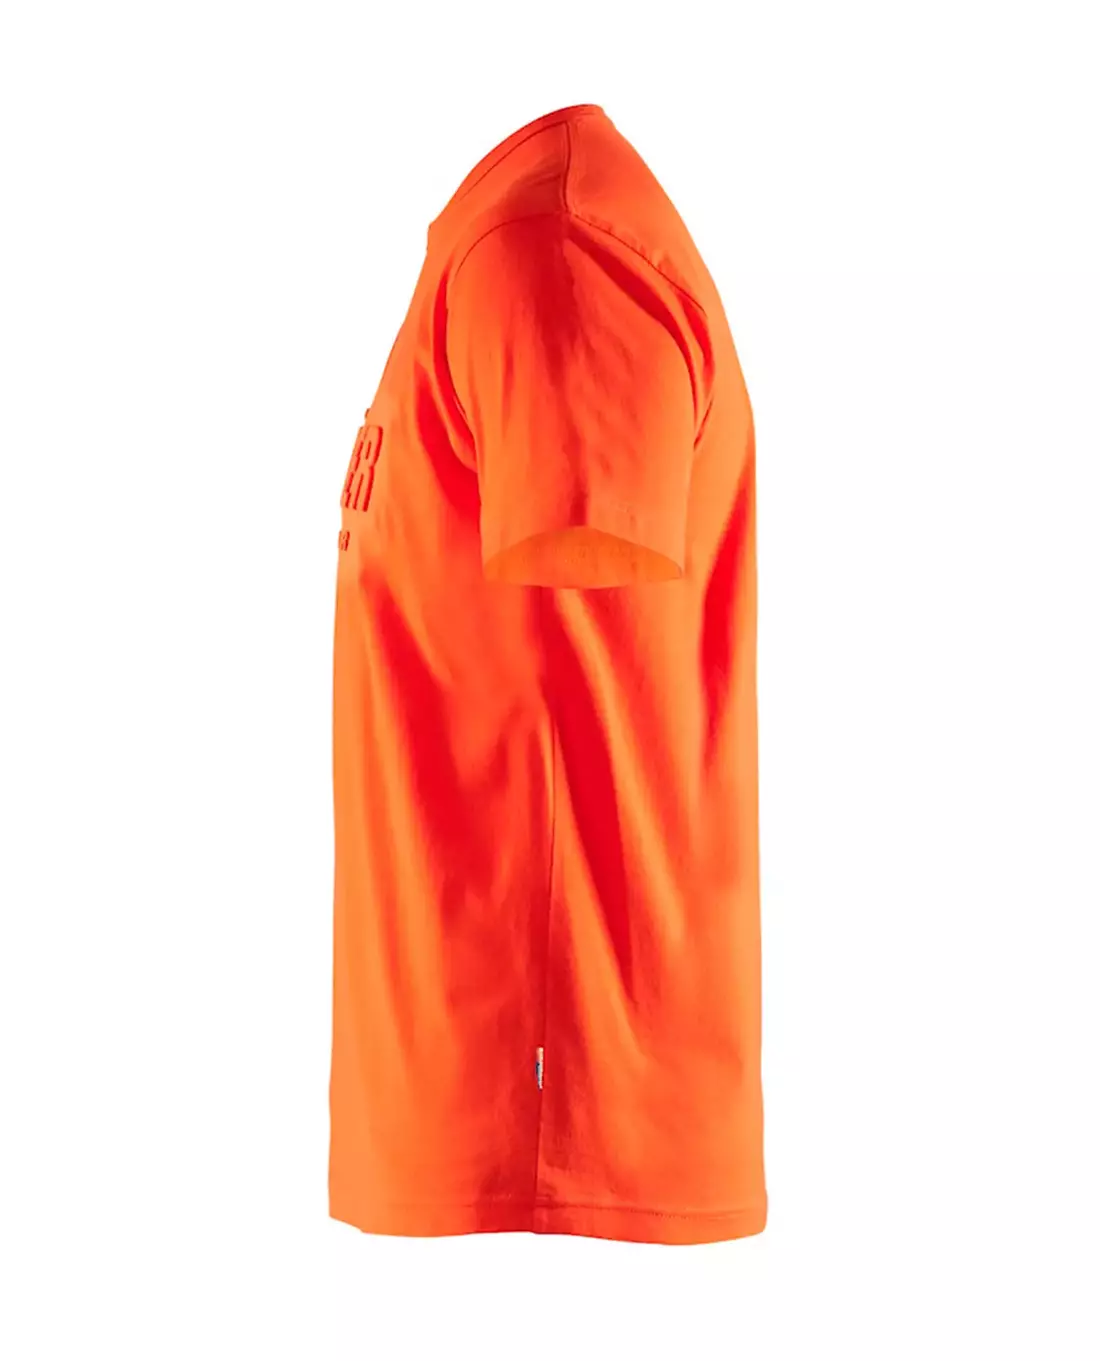 Blåkläder T-Paita 3D, Oranssinpunainen